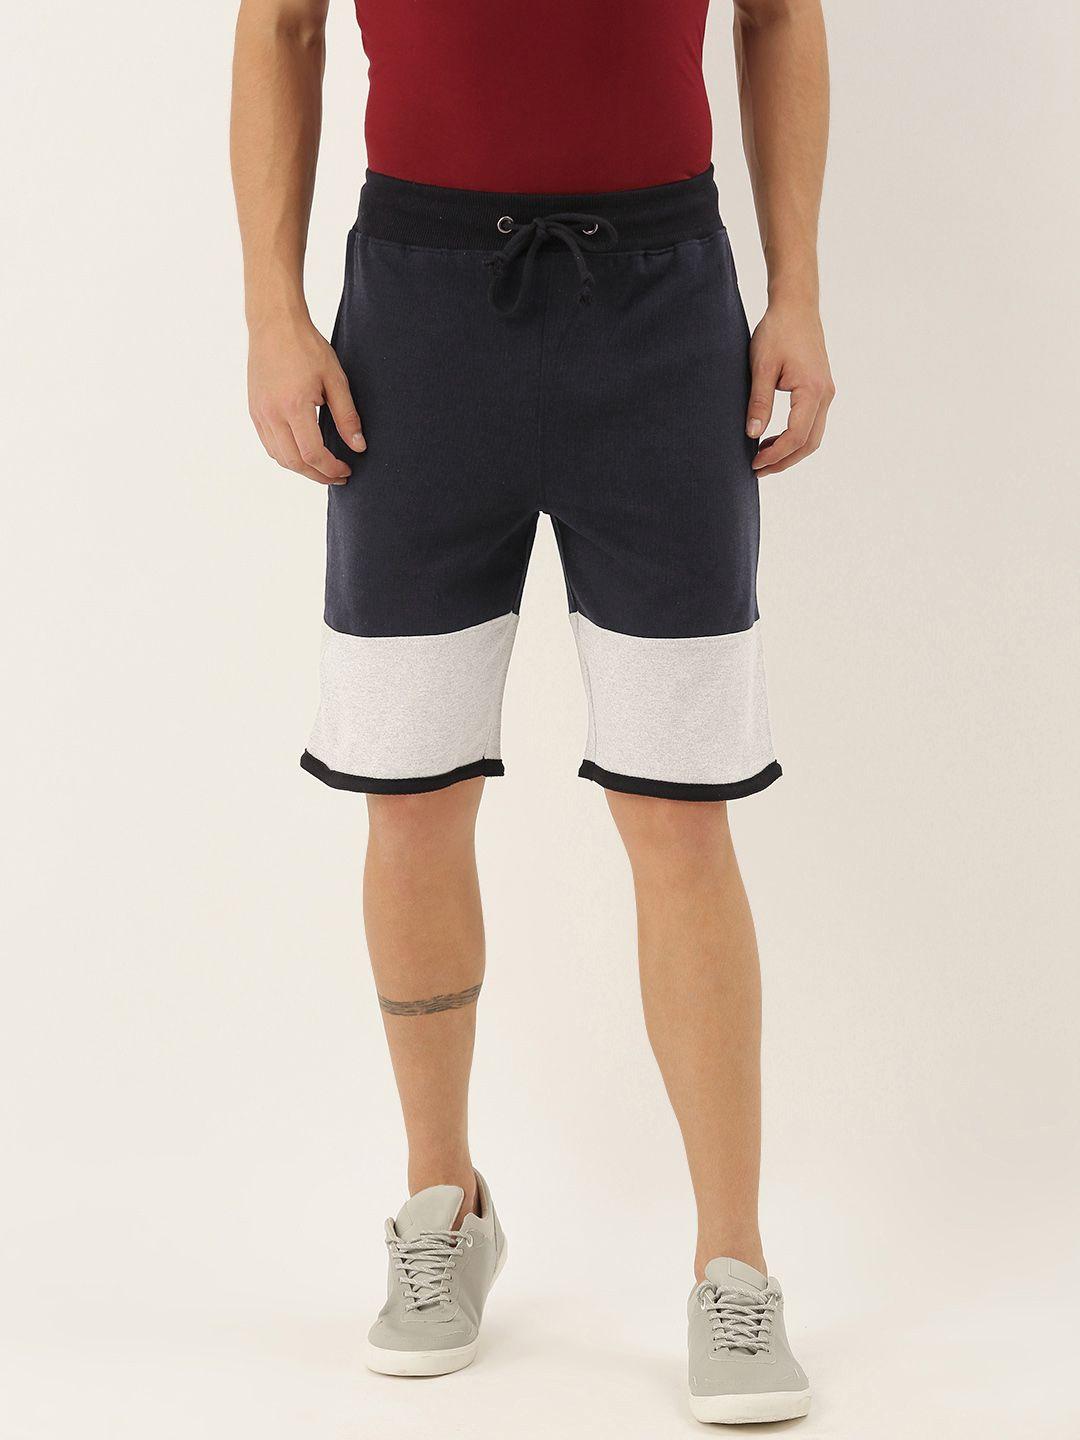 arise men navy blue & grey melange colourblocked regular fit pure cotton shorts